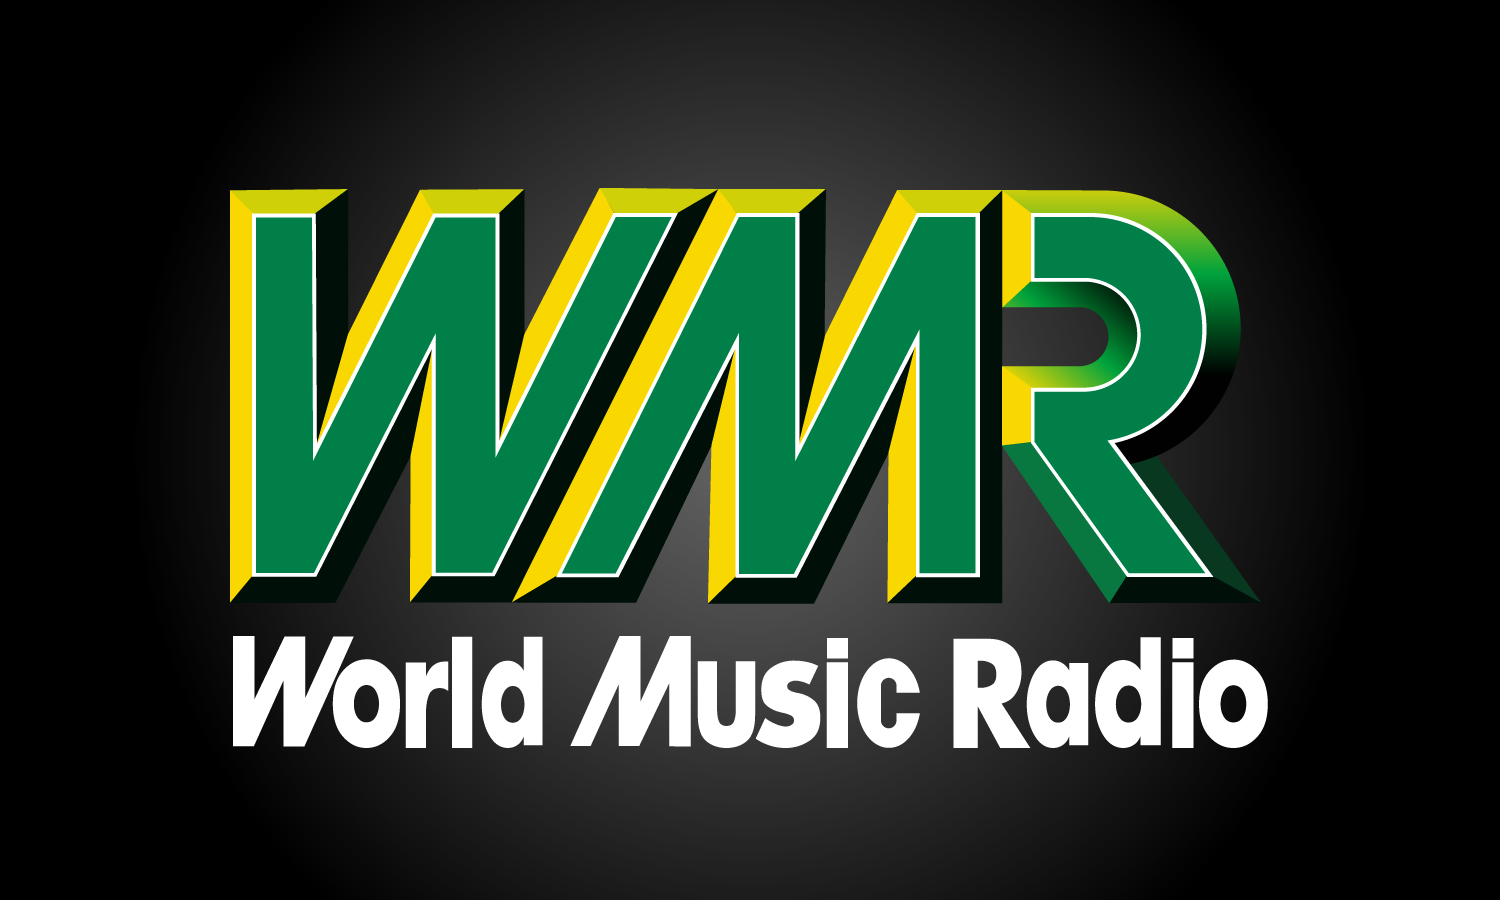 World Music Radio logo